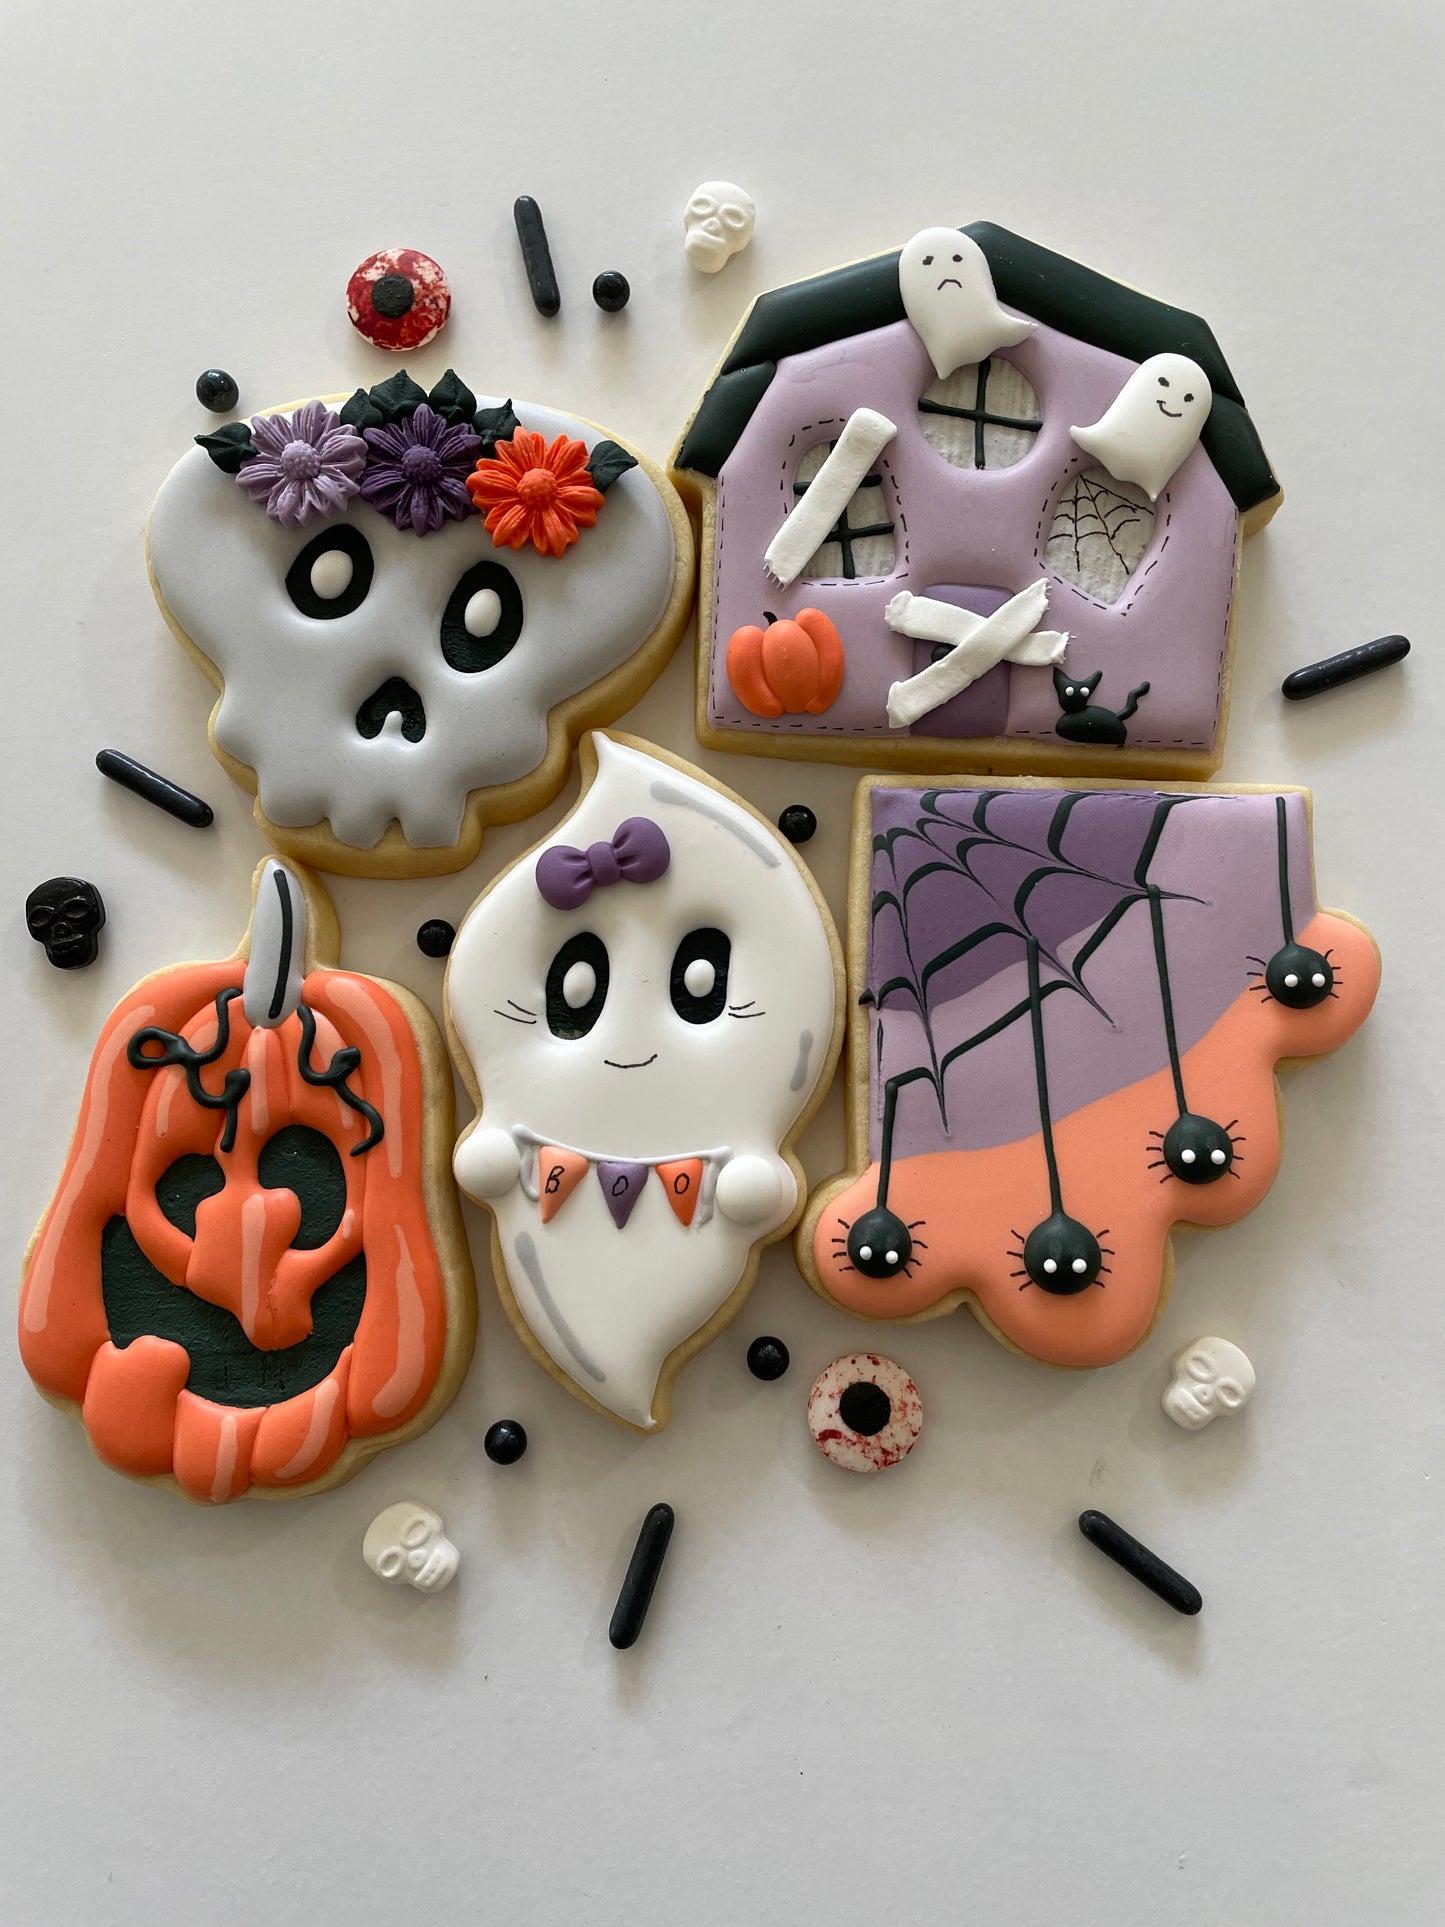 Halloween Cookie Decorating Class